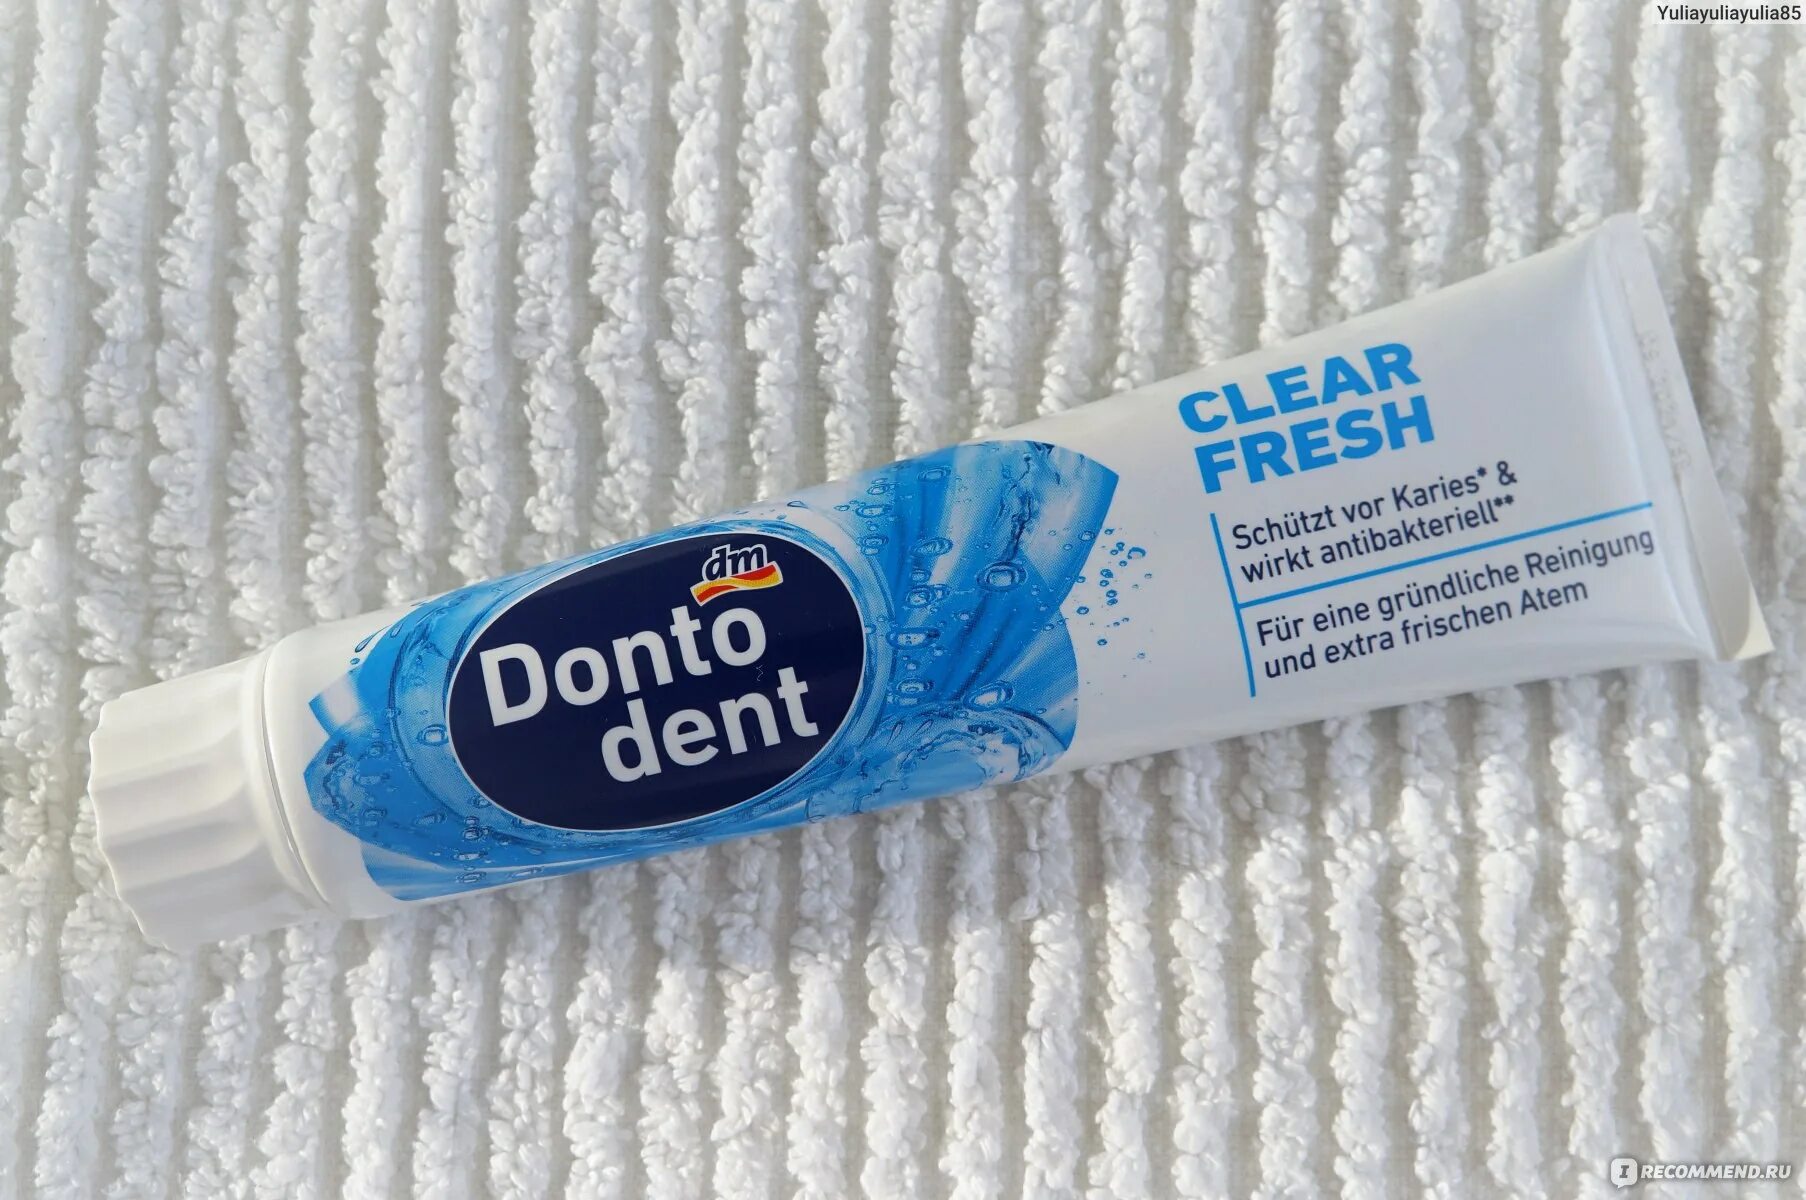 Fresh clear. Dontodent Zahnpasta Clear Fresh, 125 ml. Зубные пасты освежающие дыхание. Зубная паста лучшая бюджетная.